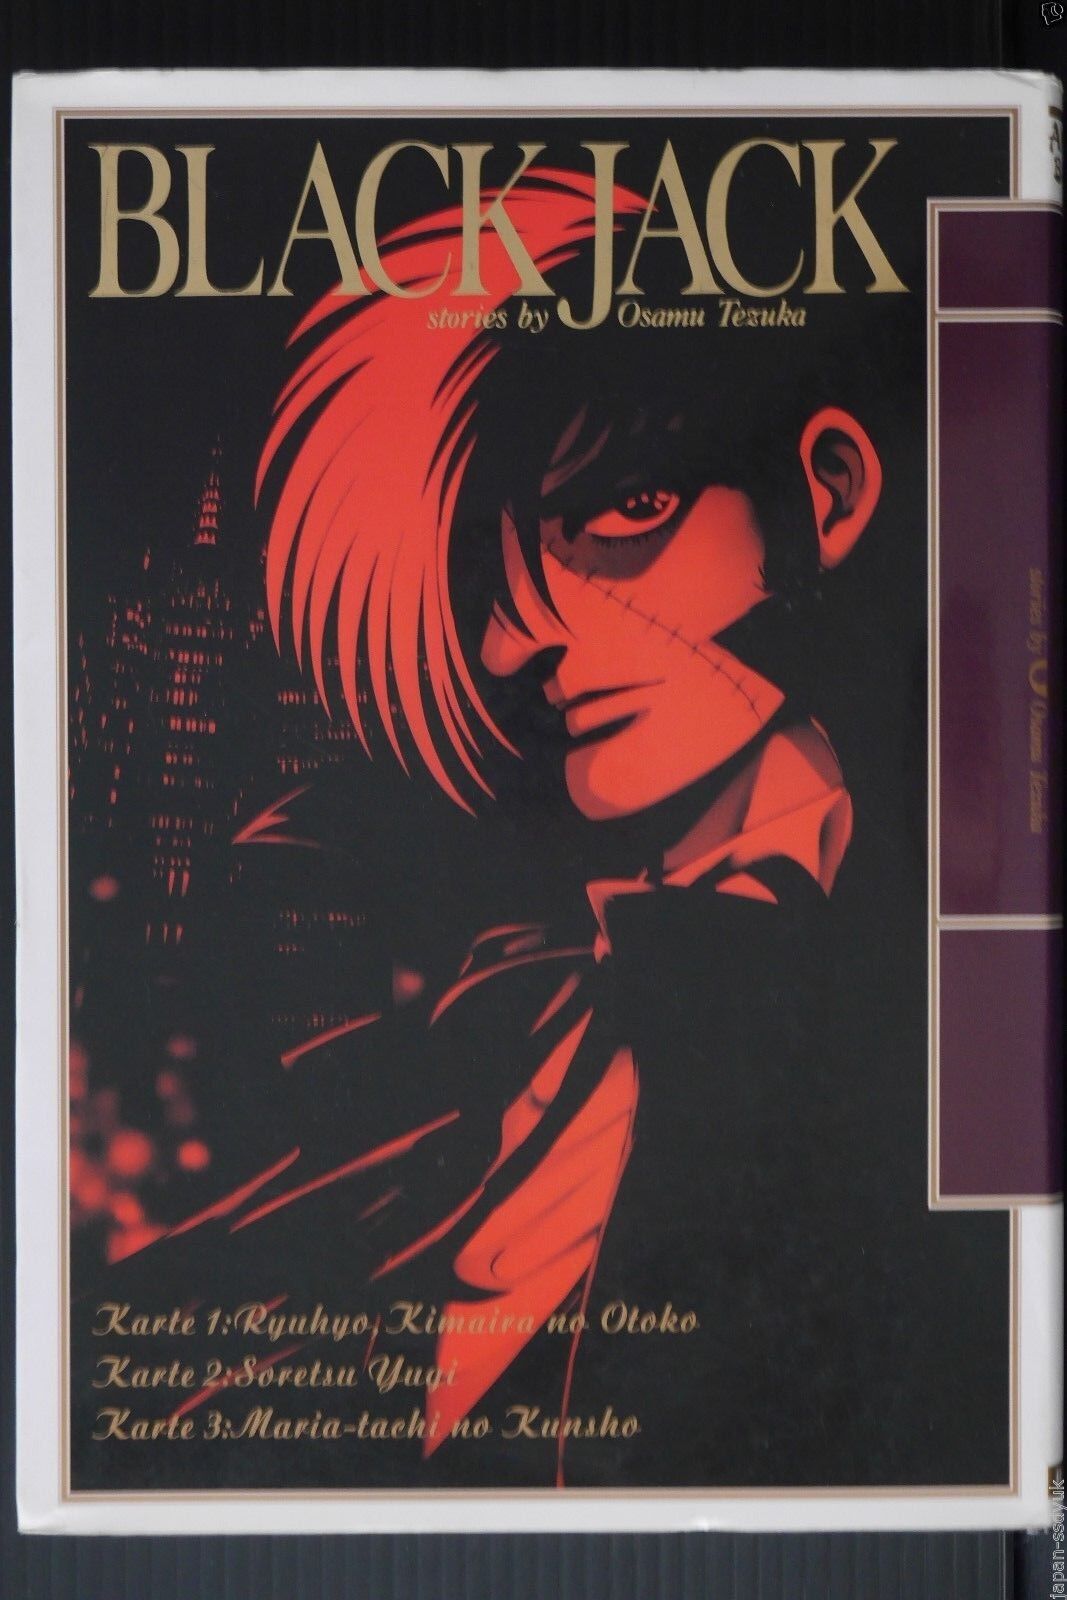 JAPAN Osamu Tezuka: Black Jack Anime Book